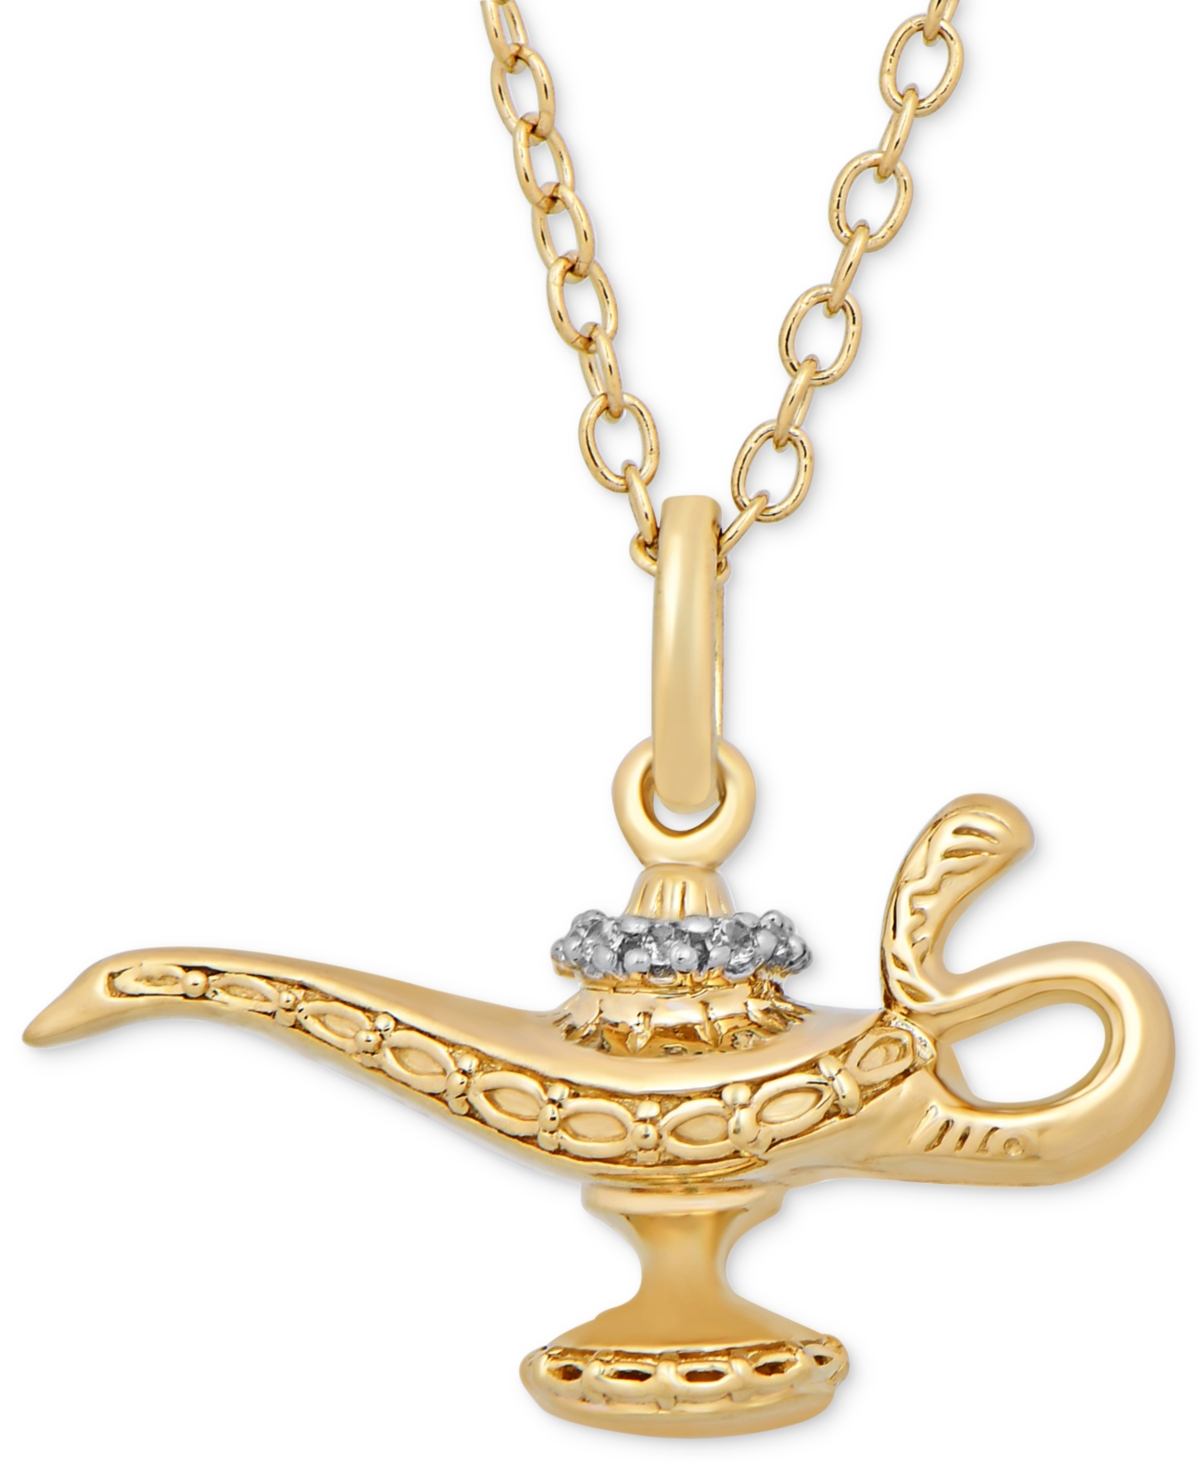 Enchanted Disney Fine Jewelry Diamond Accent Jasmine Lamp Pendant Necklace in 10k Gold, 16" + 2" extender